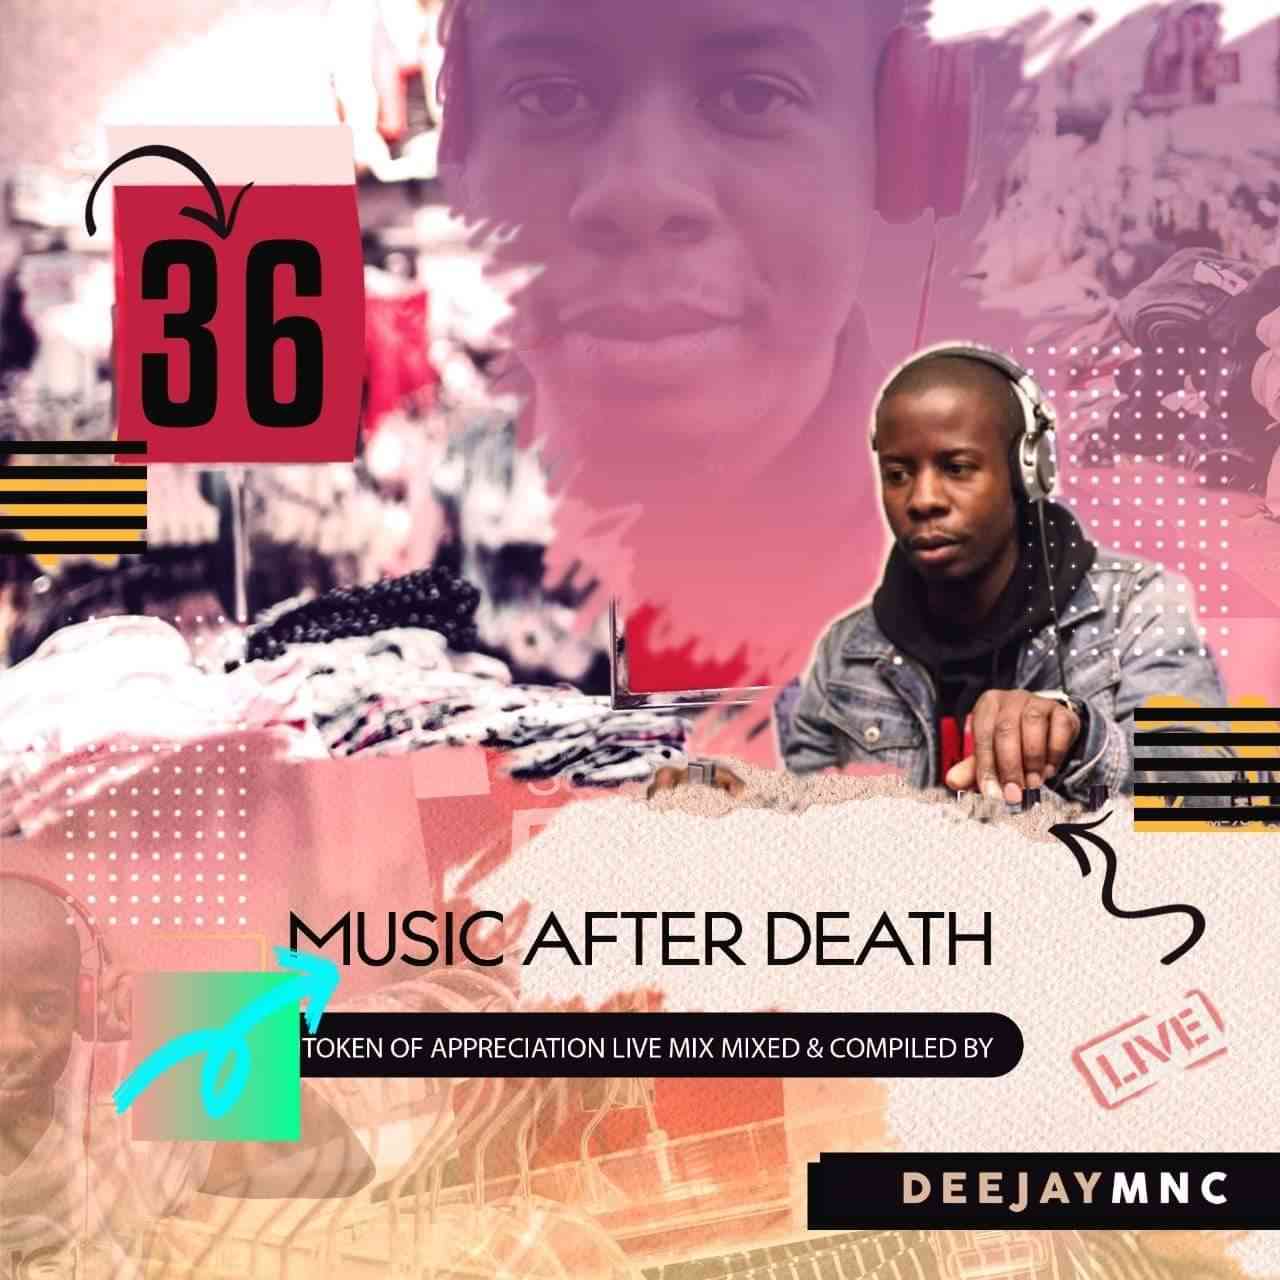 Deejay Mnc Music After Death Episode 36